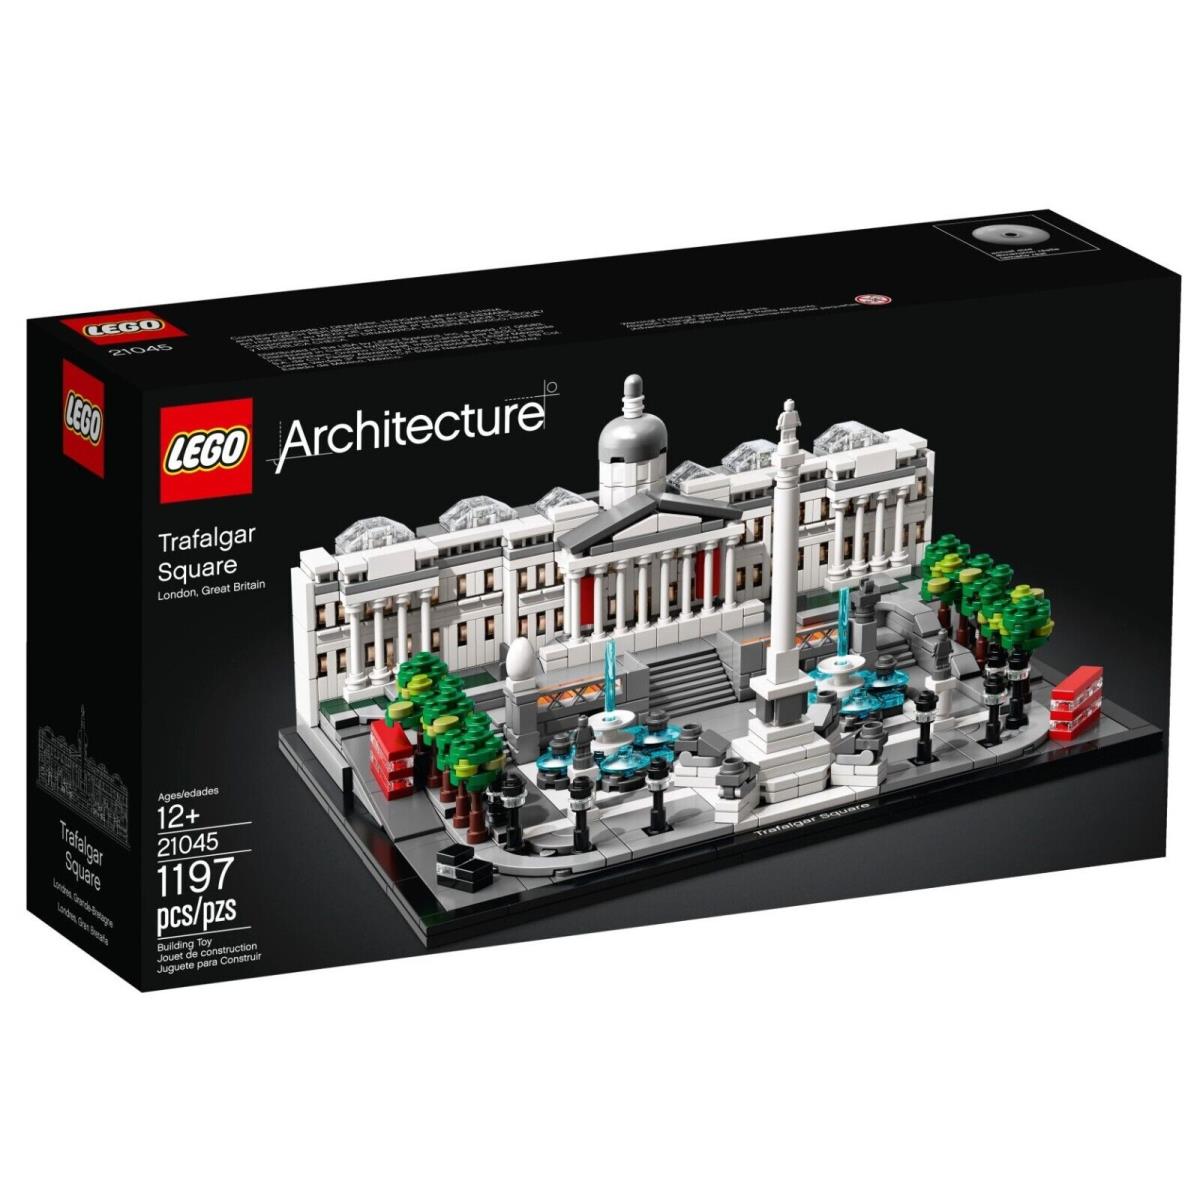 Lego 21045 Trafalgar Square Architecture Retired Box